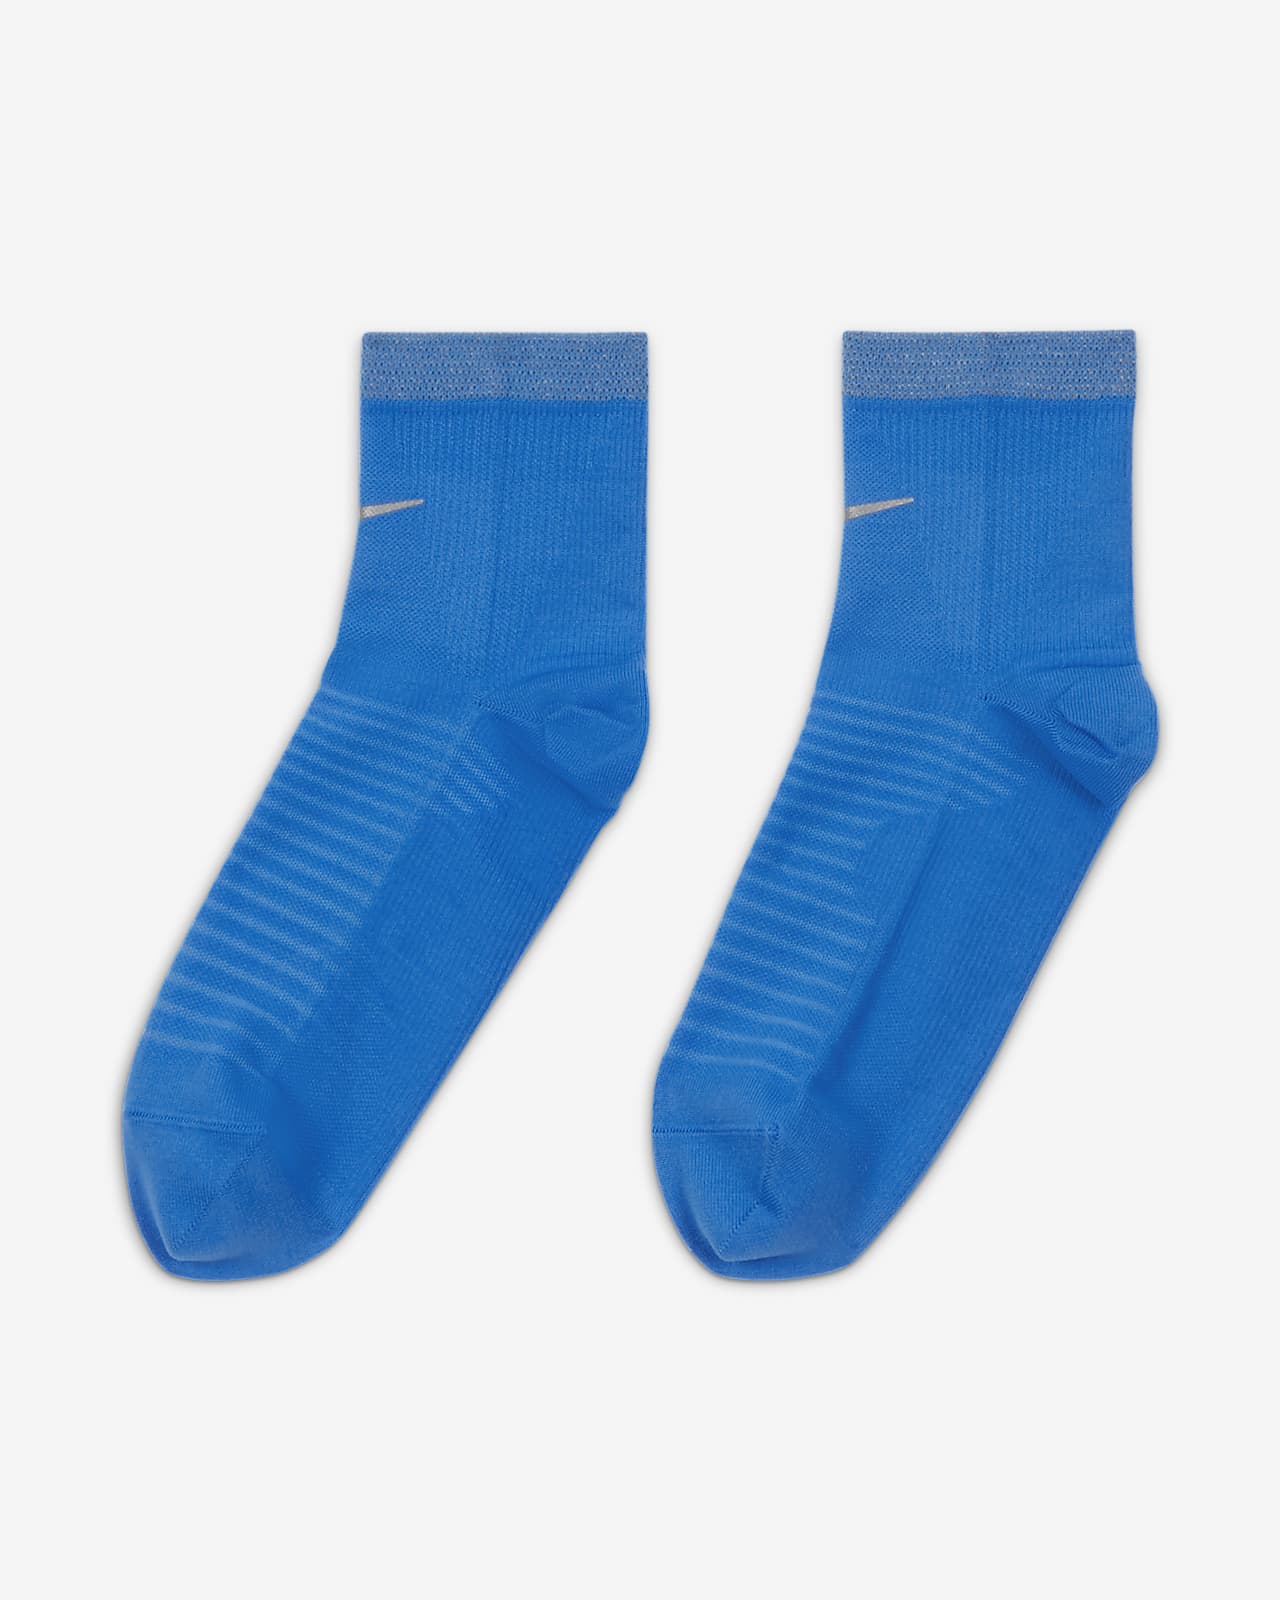 nike reflective socks